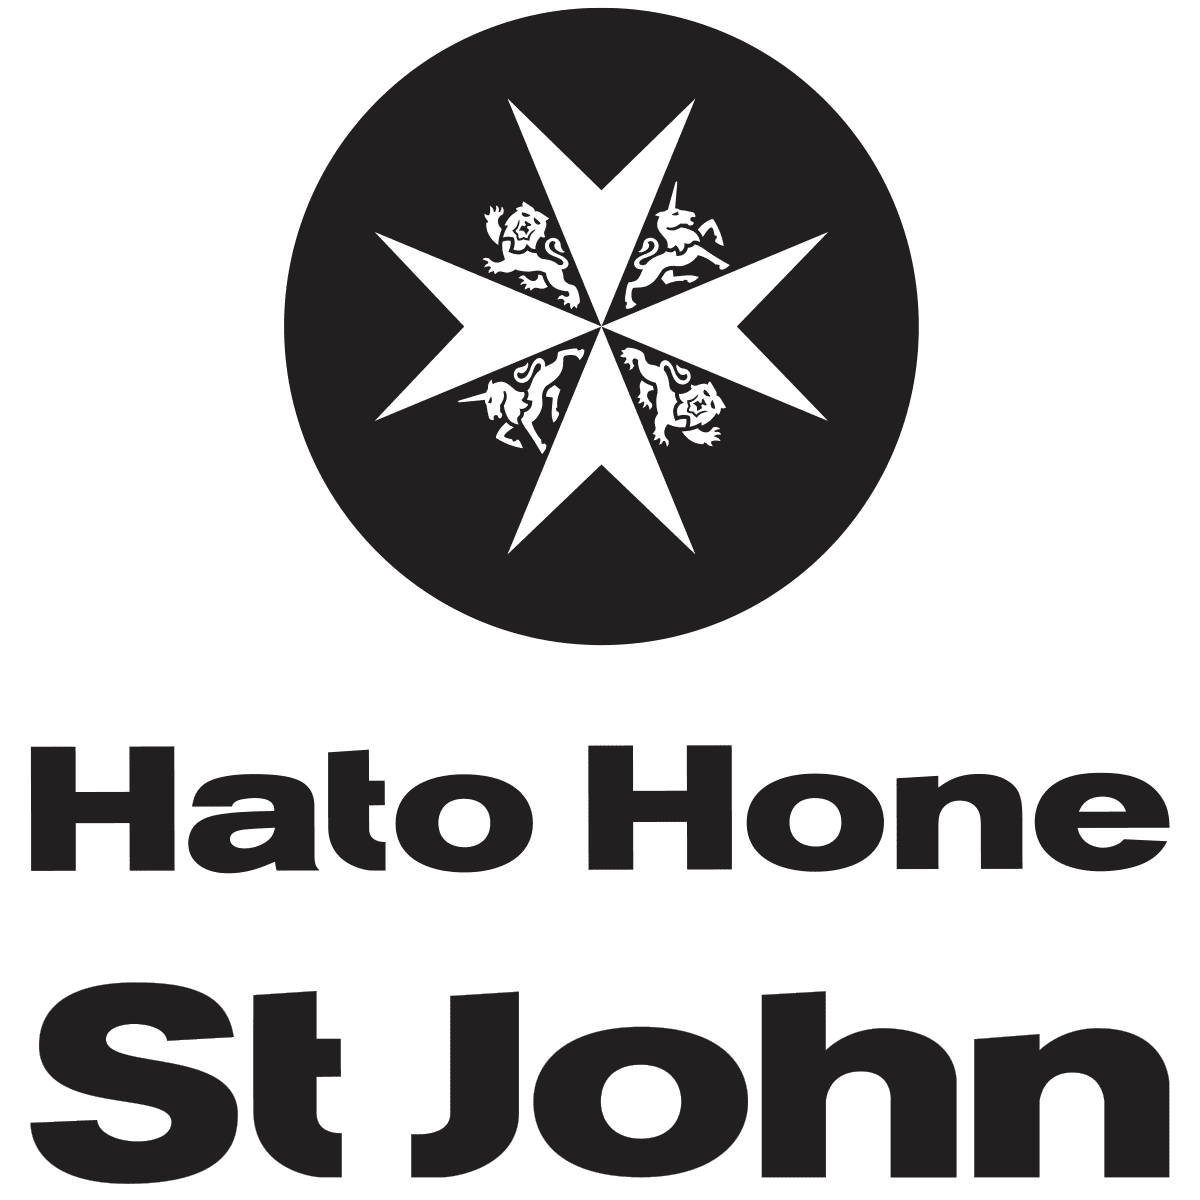 Hato Hone St John Logo